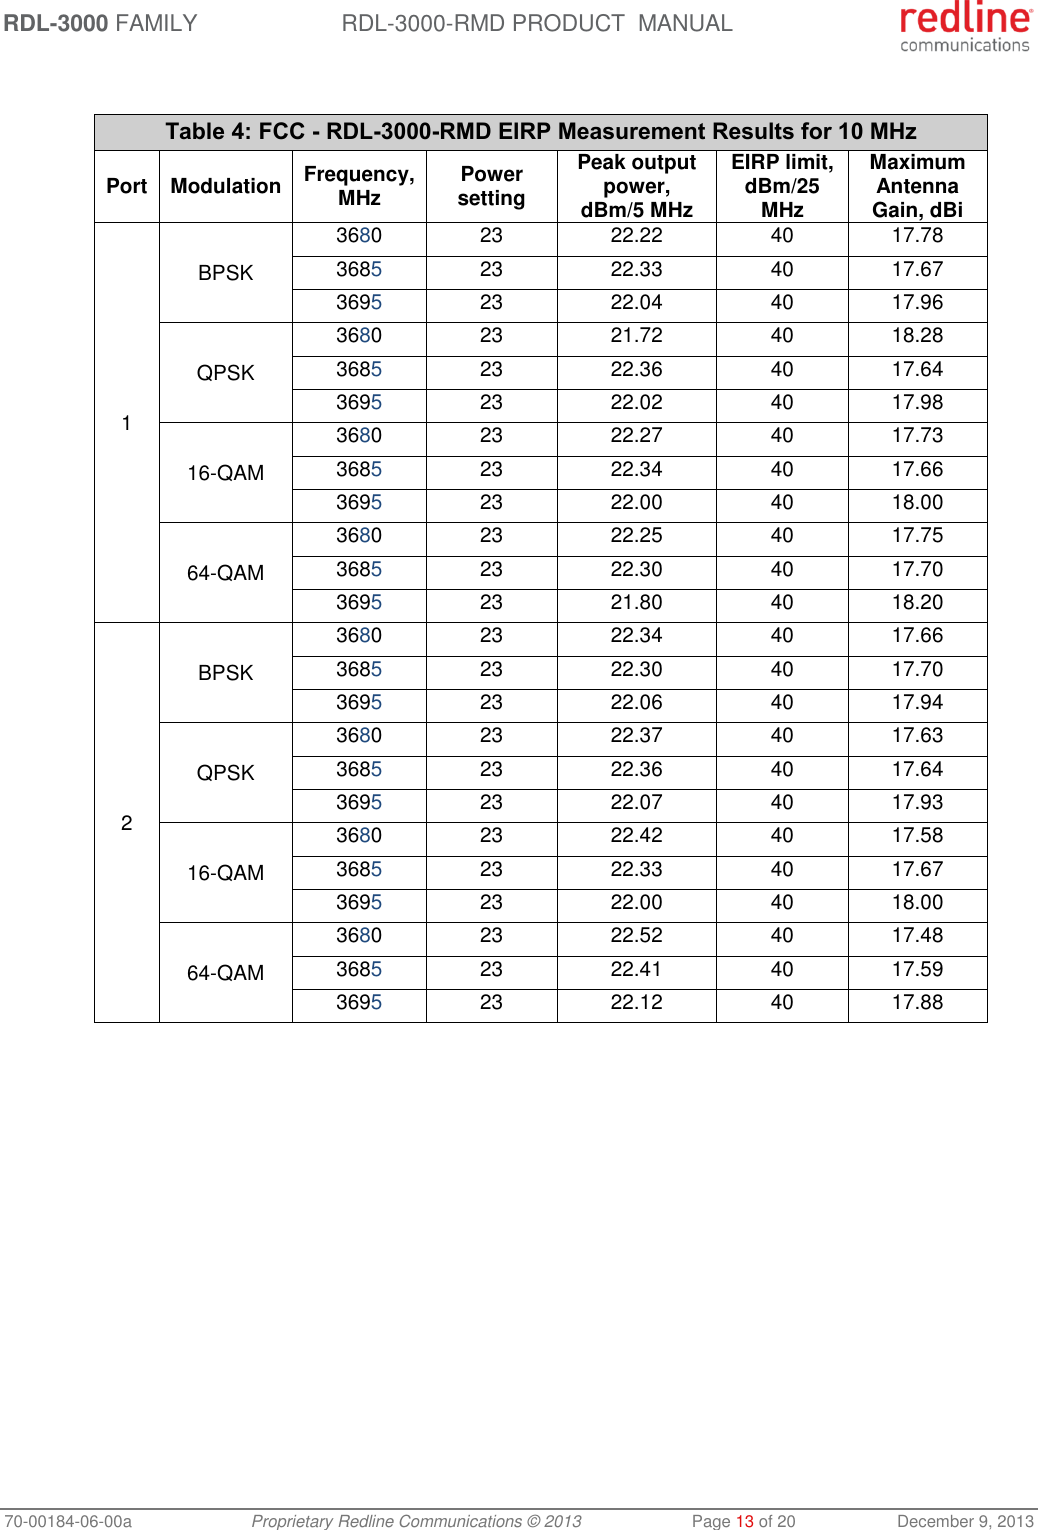 RDL-3000 FAMILY RDL-3000-RMD PRODUCT  MANUAL 70-00184-06-00a  Proprietary Redline Communications © 2013  Page 13 of 20  December 9, 2013  Table 4: FCC - RDL-3000-RMD EIRP Measurement Results for 10 MHz Port Modulation Frequency, MHz Power setting Peak output power, dBm/5 MHz EIRP limit, dBm/25 MHz Maximum Antenna Gain, dBi 1 BPSK 3680 23 22.22 40 17.78 3685 23 22.33 40 17.67 3695 23 22.04 40 17.96 QPSK 3680 23 21.72 40 18.28 3685 23 22.36 40 17.64 3695 23 22.02 40 17.98 16-QAM 3680 23 22.27 40 17.73 3685 23 22.34 40 17.66 3695 23 22.00 40 18.00 64-QAM 3680 23 22.25 40 17.75 3685 23 22.30 40 17.70 3695 23 21.80 40 18.20 2 BPSK 3680 23 22.34 40 17.66 3685 23 22.30 40 17.70 3695 23 22.06 40 17.94 QPSK 3680 23 22.37 40 17.63 3685 23 22.36 40 17.64 3695 23 22.07 40 17.93 16-QAM 3680 23 22.42 40 17.58 3685 23 22.33 40 17.67 3695 23 22.00 40 18.00 64-QAM 3680 23 22.52 40 17.48 3685 23 22.41 40 17.59 3695 23 22.12 40 17.88  